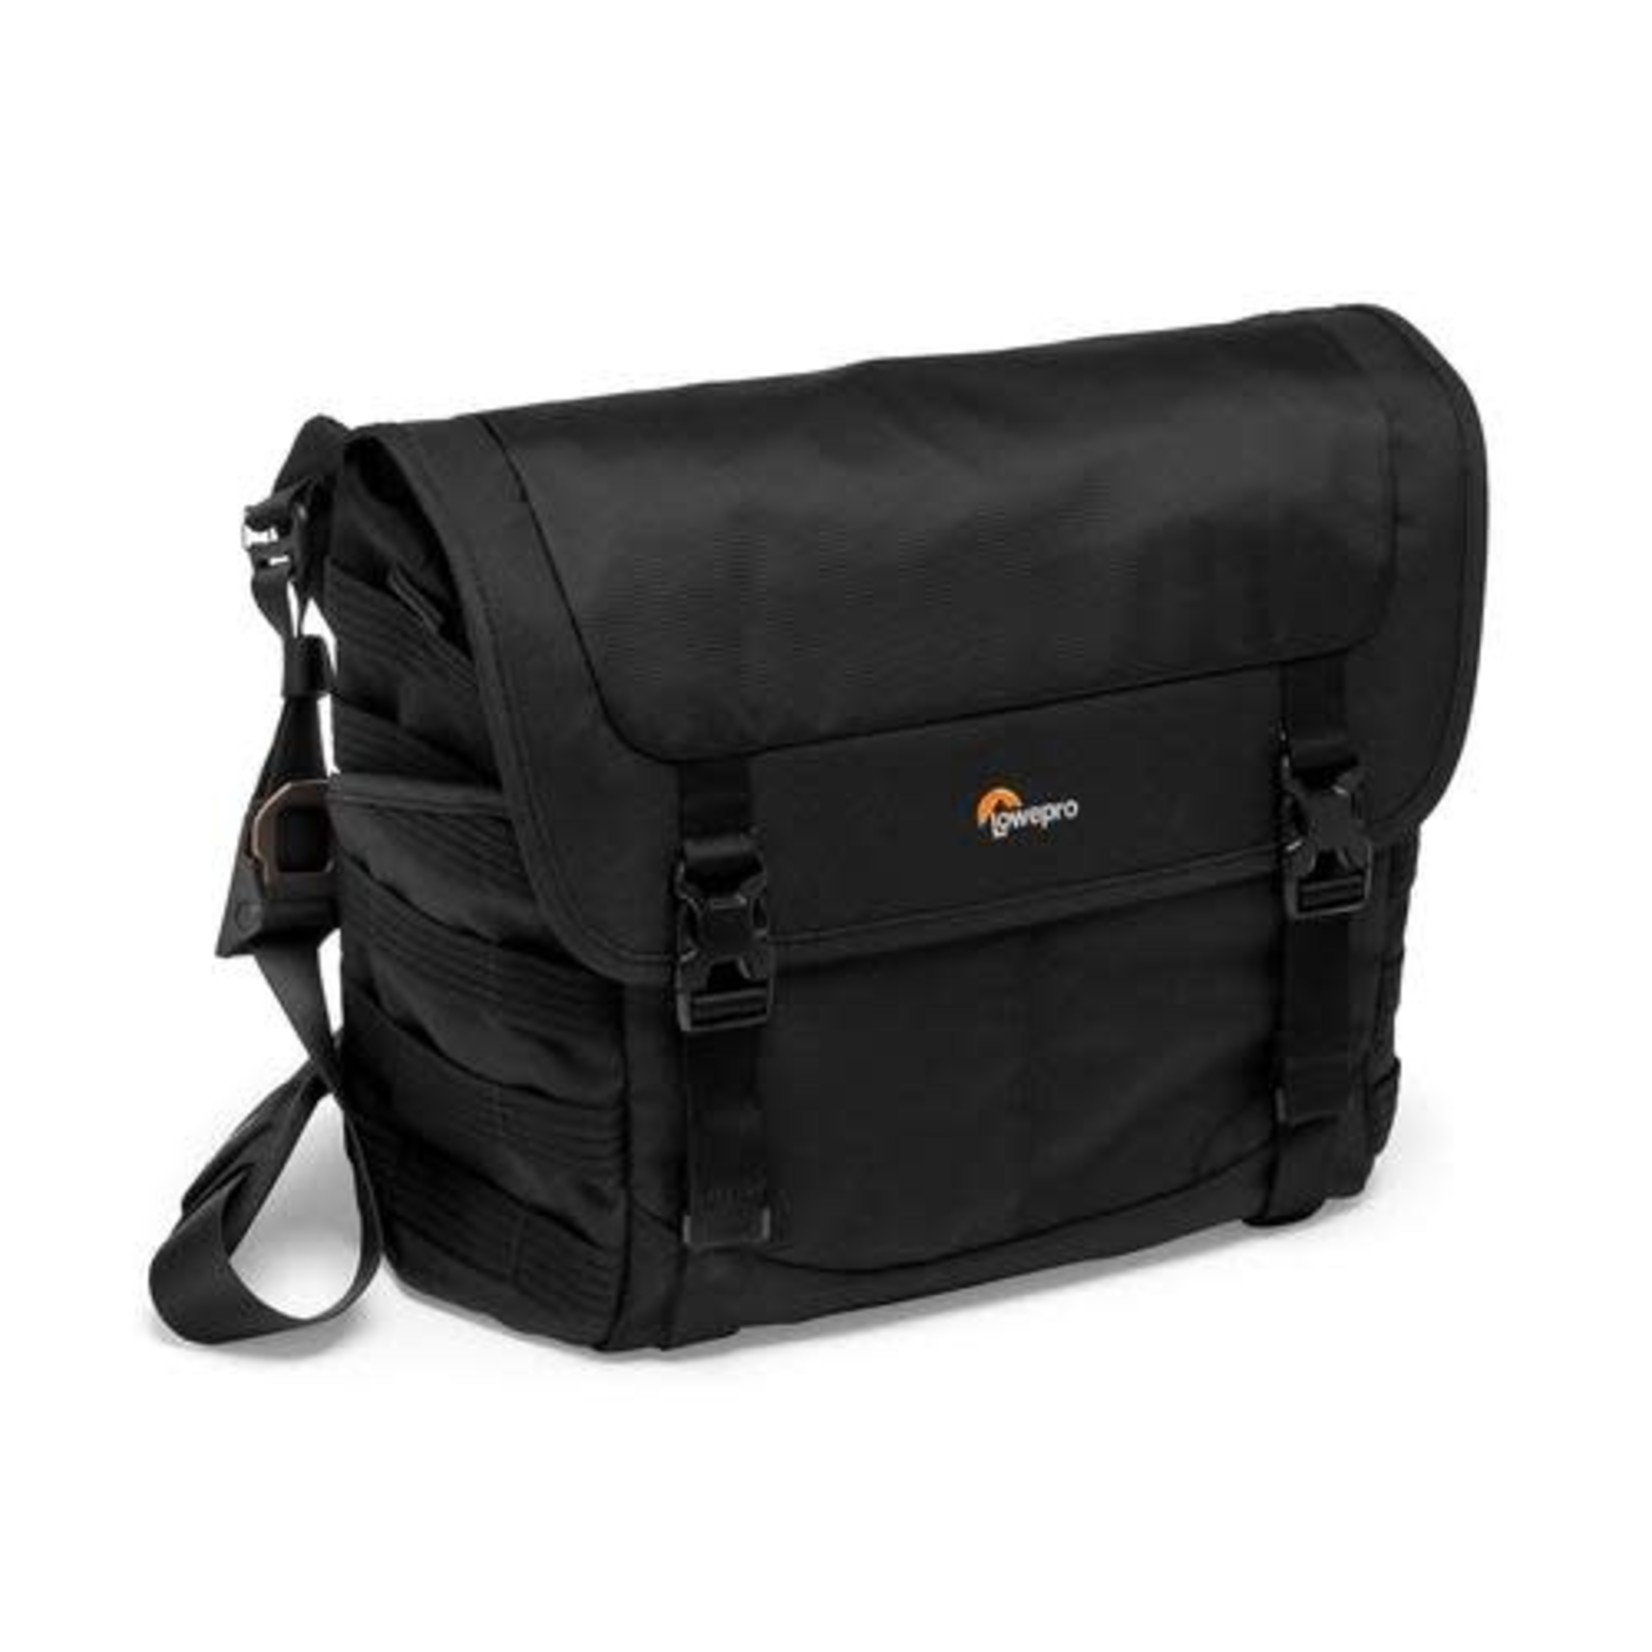 Lowepro Lowepro ProTactic MG 160 AW II Camera Messenger Bag (Black)